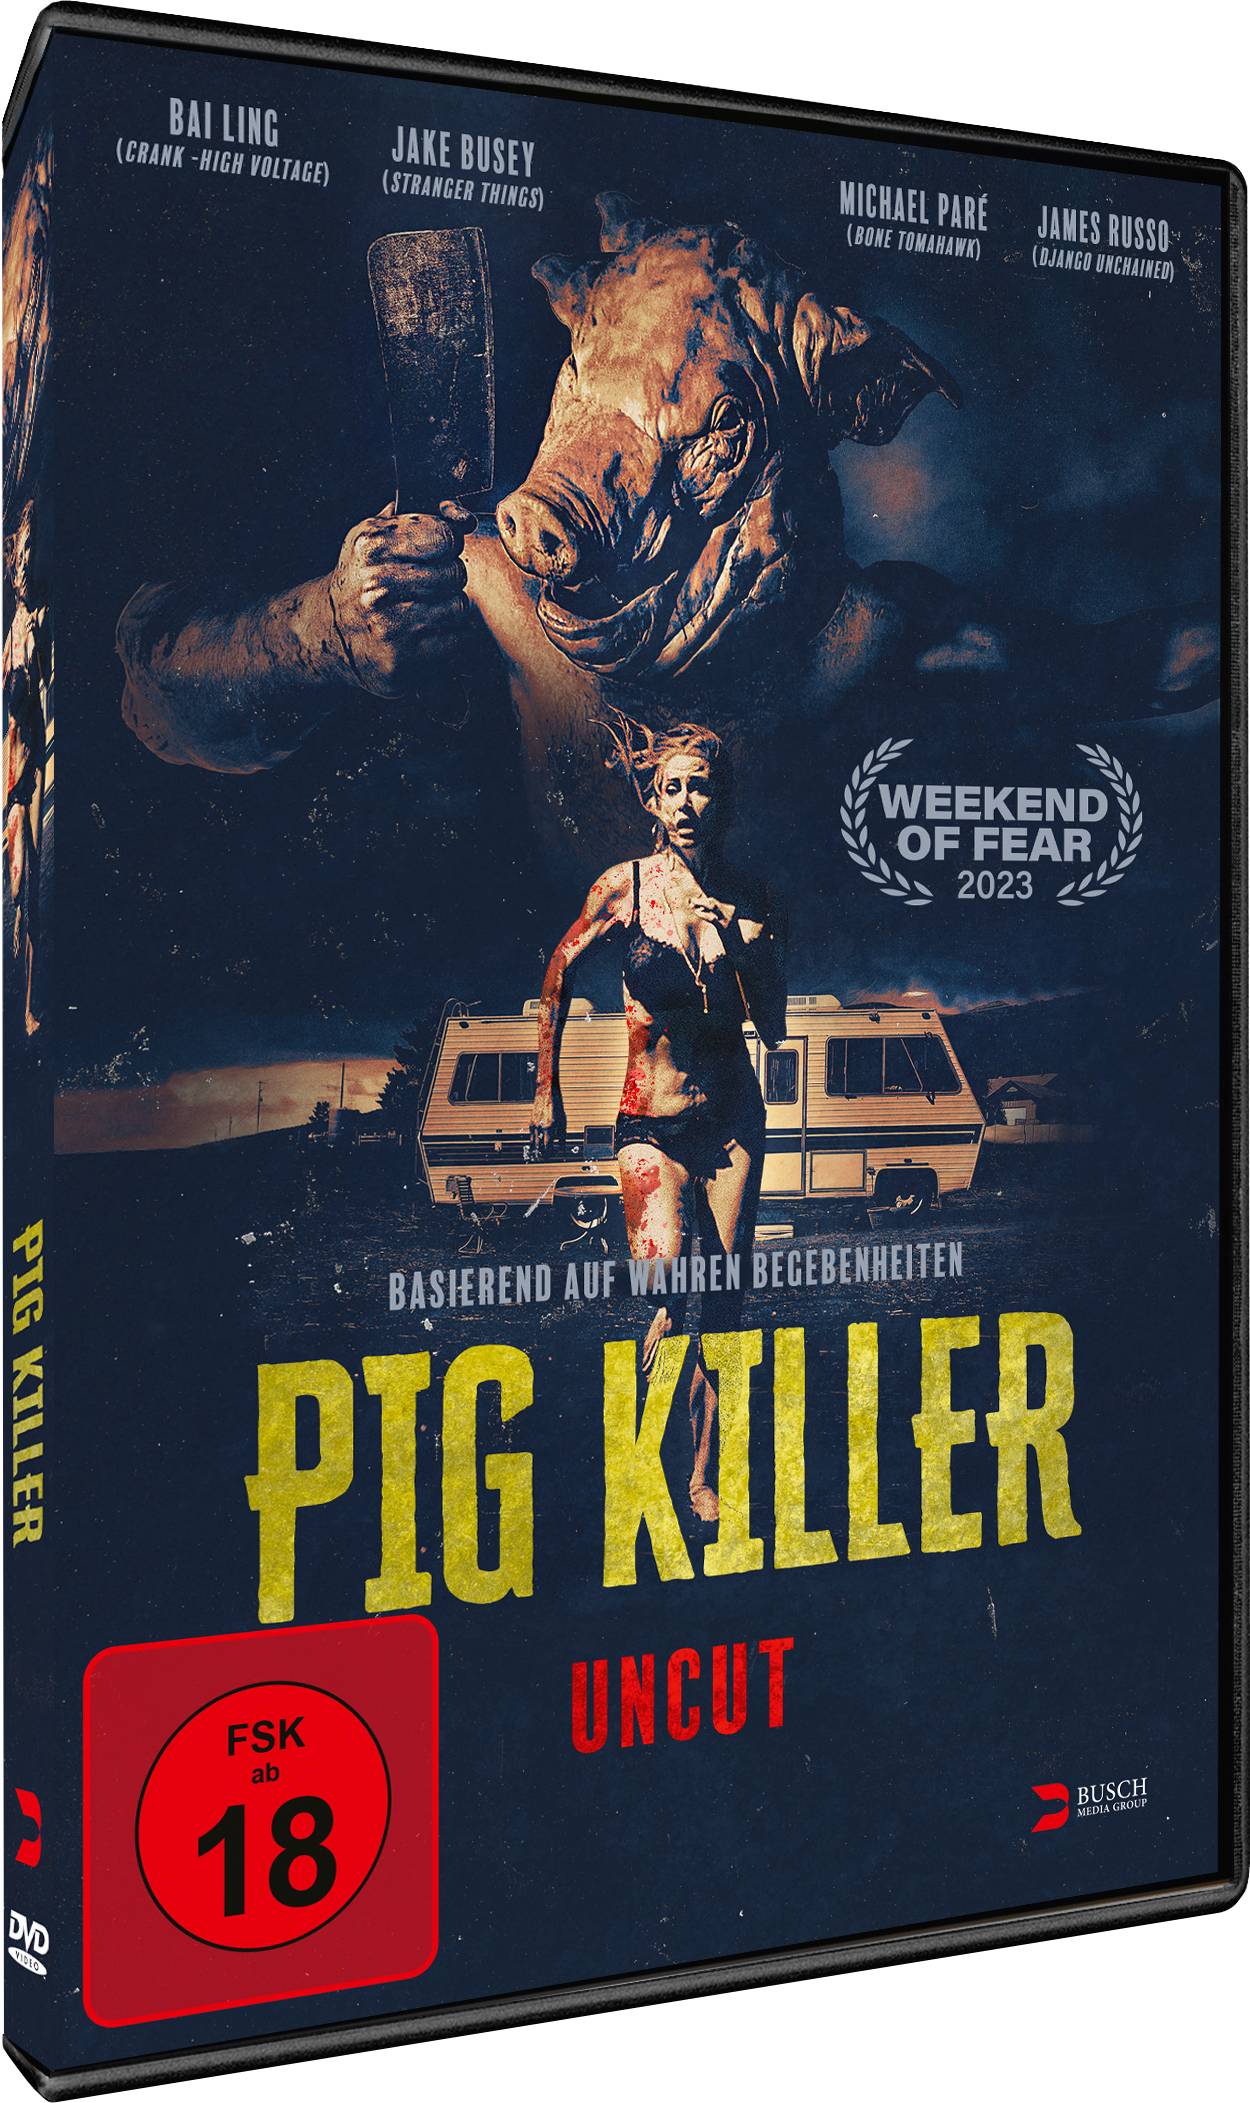 Pig Killer